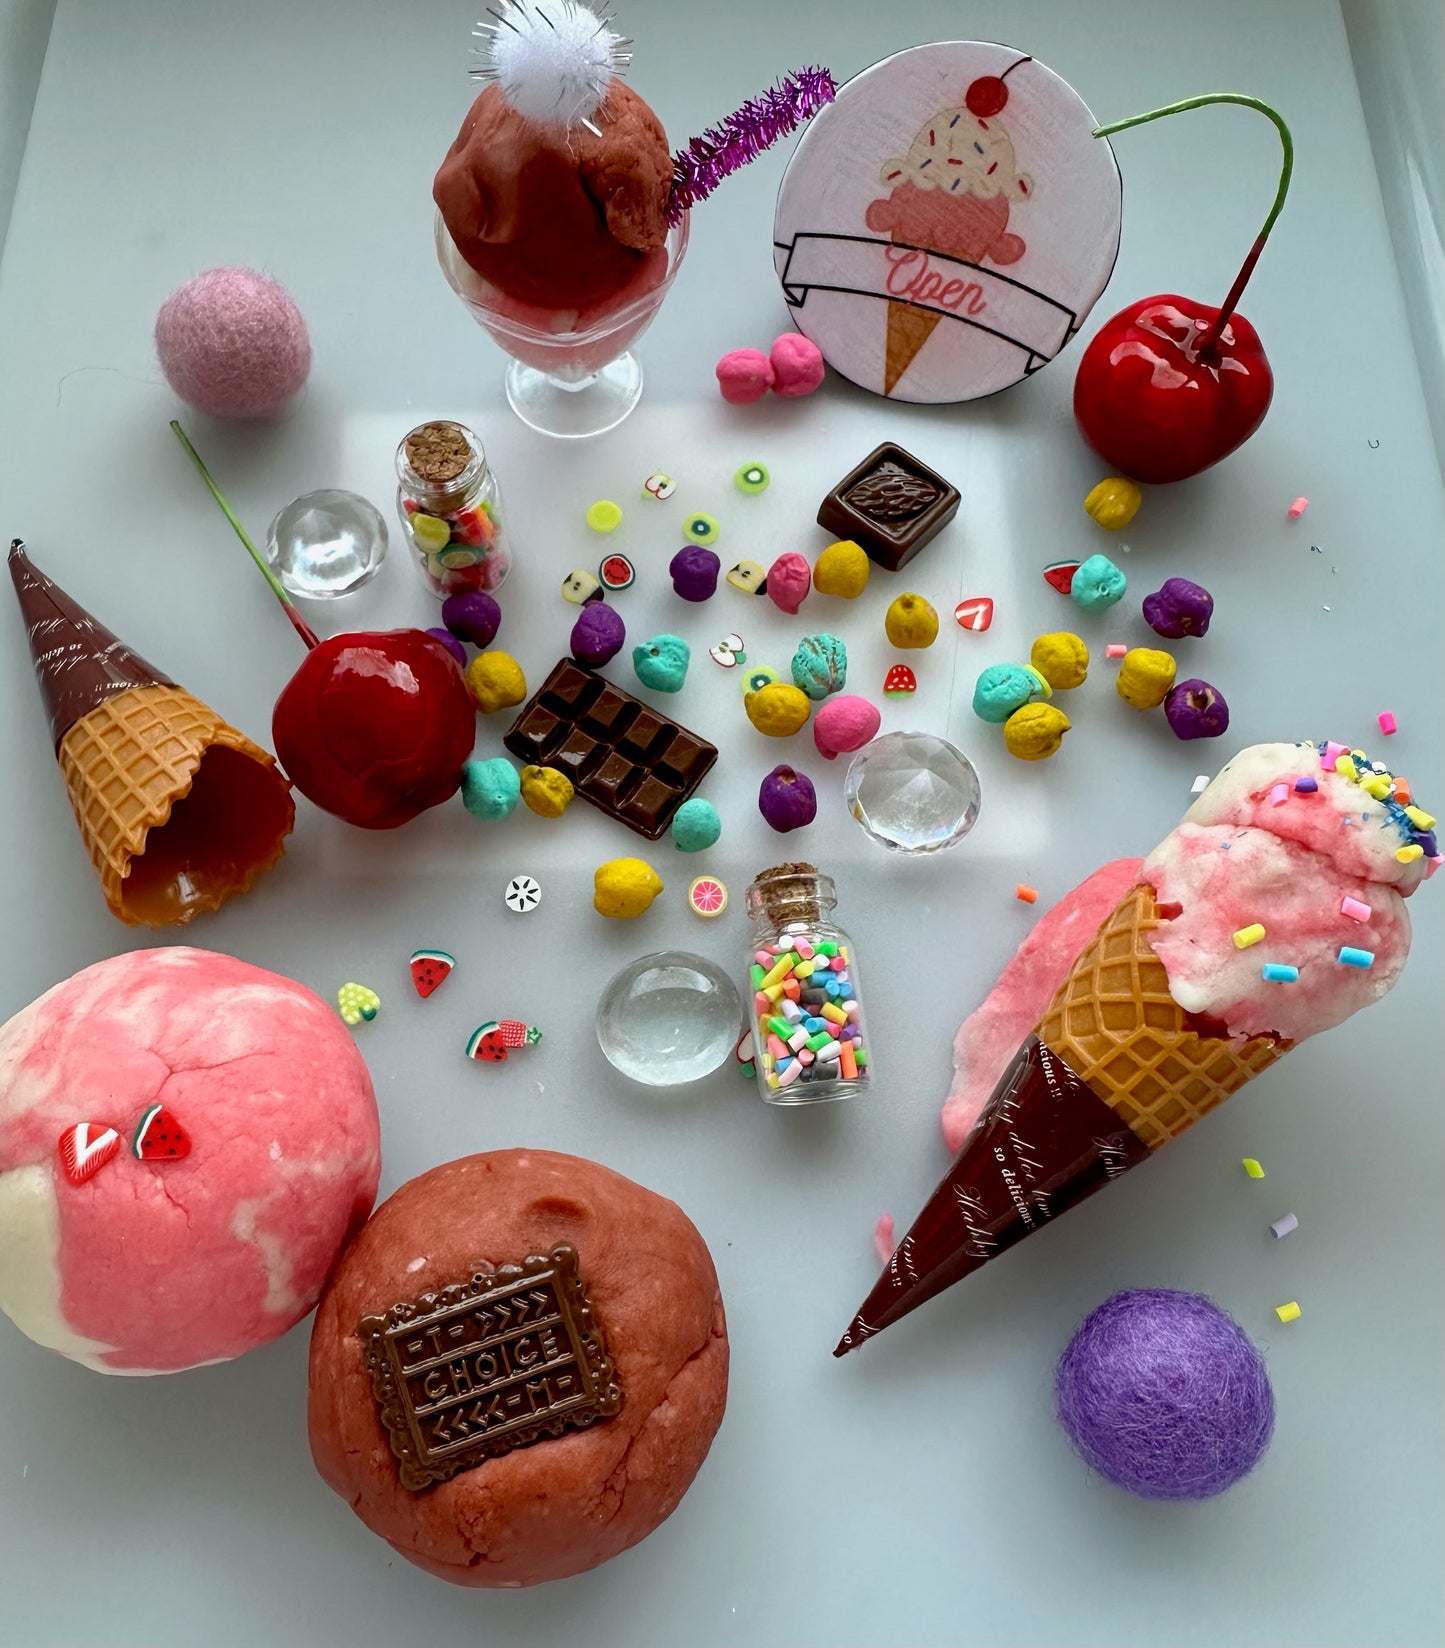 Ice Cream Shop Play Dough Kit by Sensory Made Simple